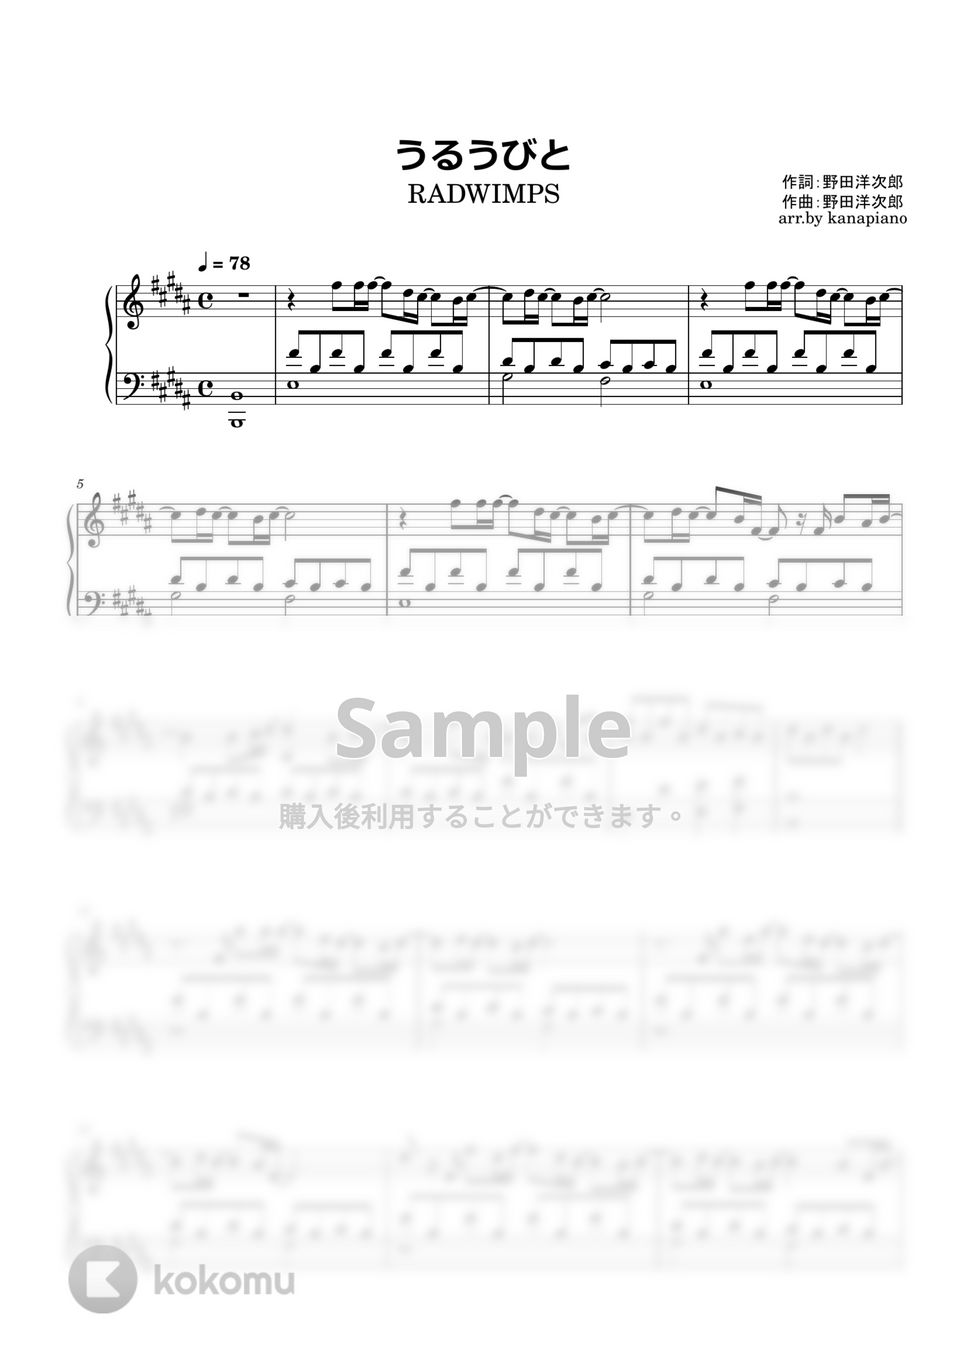 RADWIMPS - うるうびと (ピアノソロ/余命10年主題歌) by kanapiano